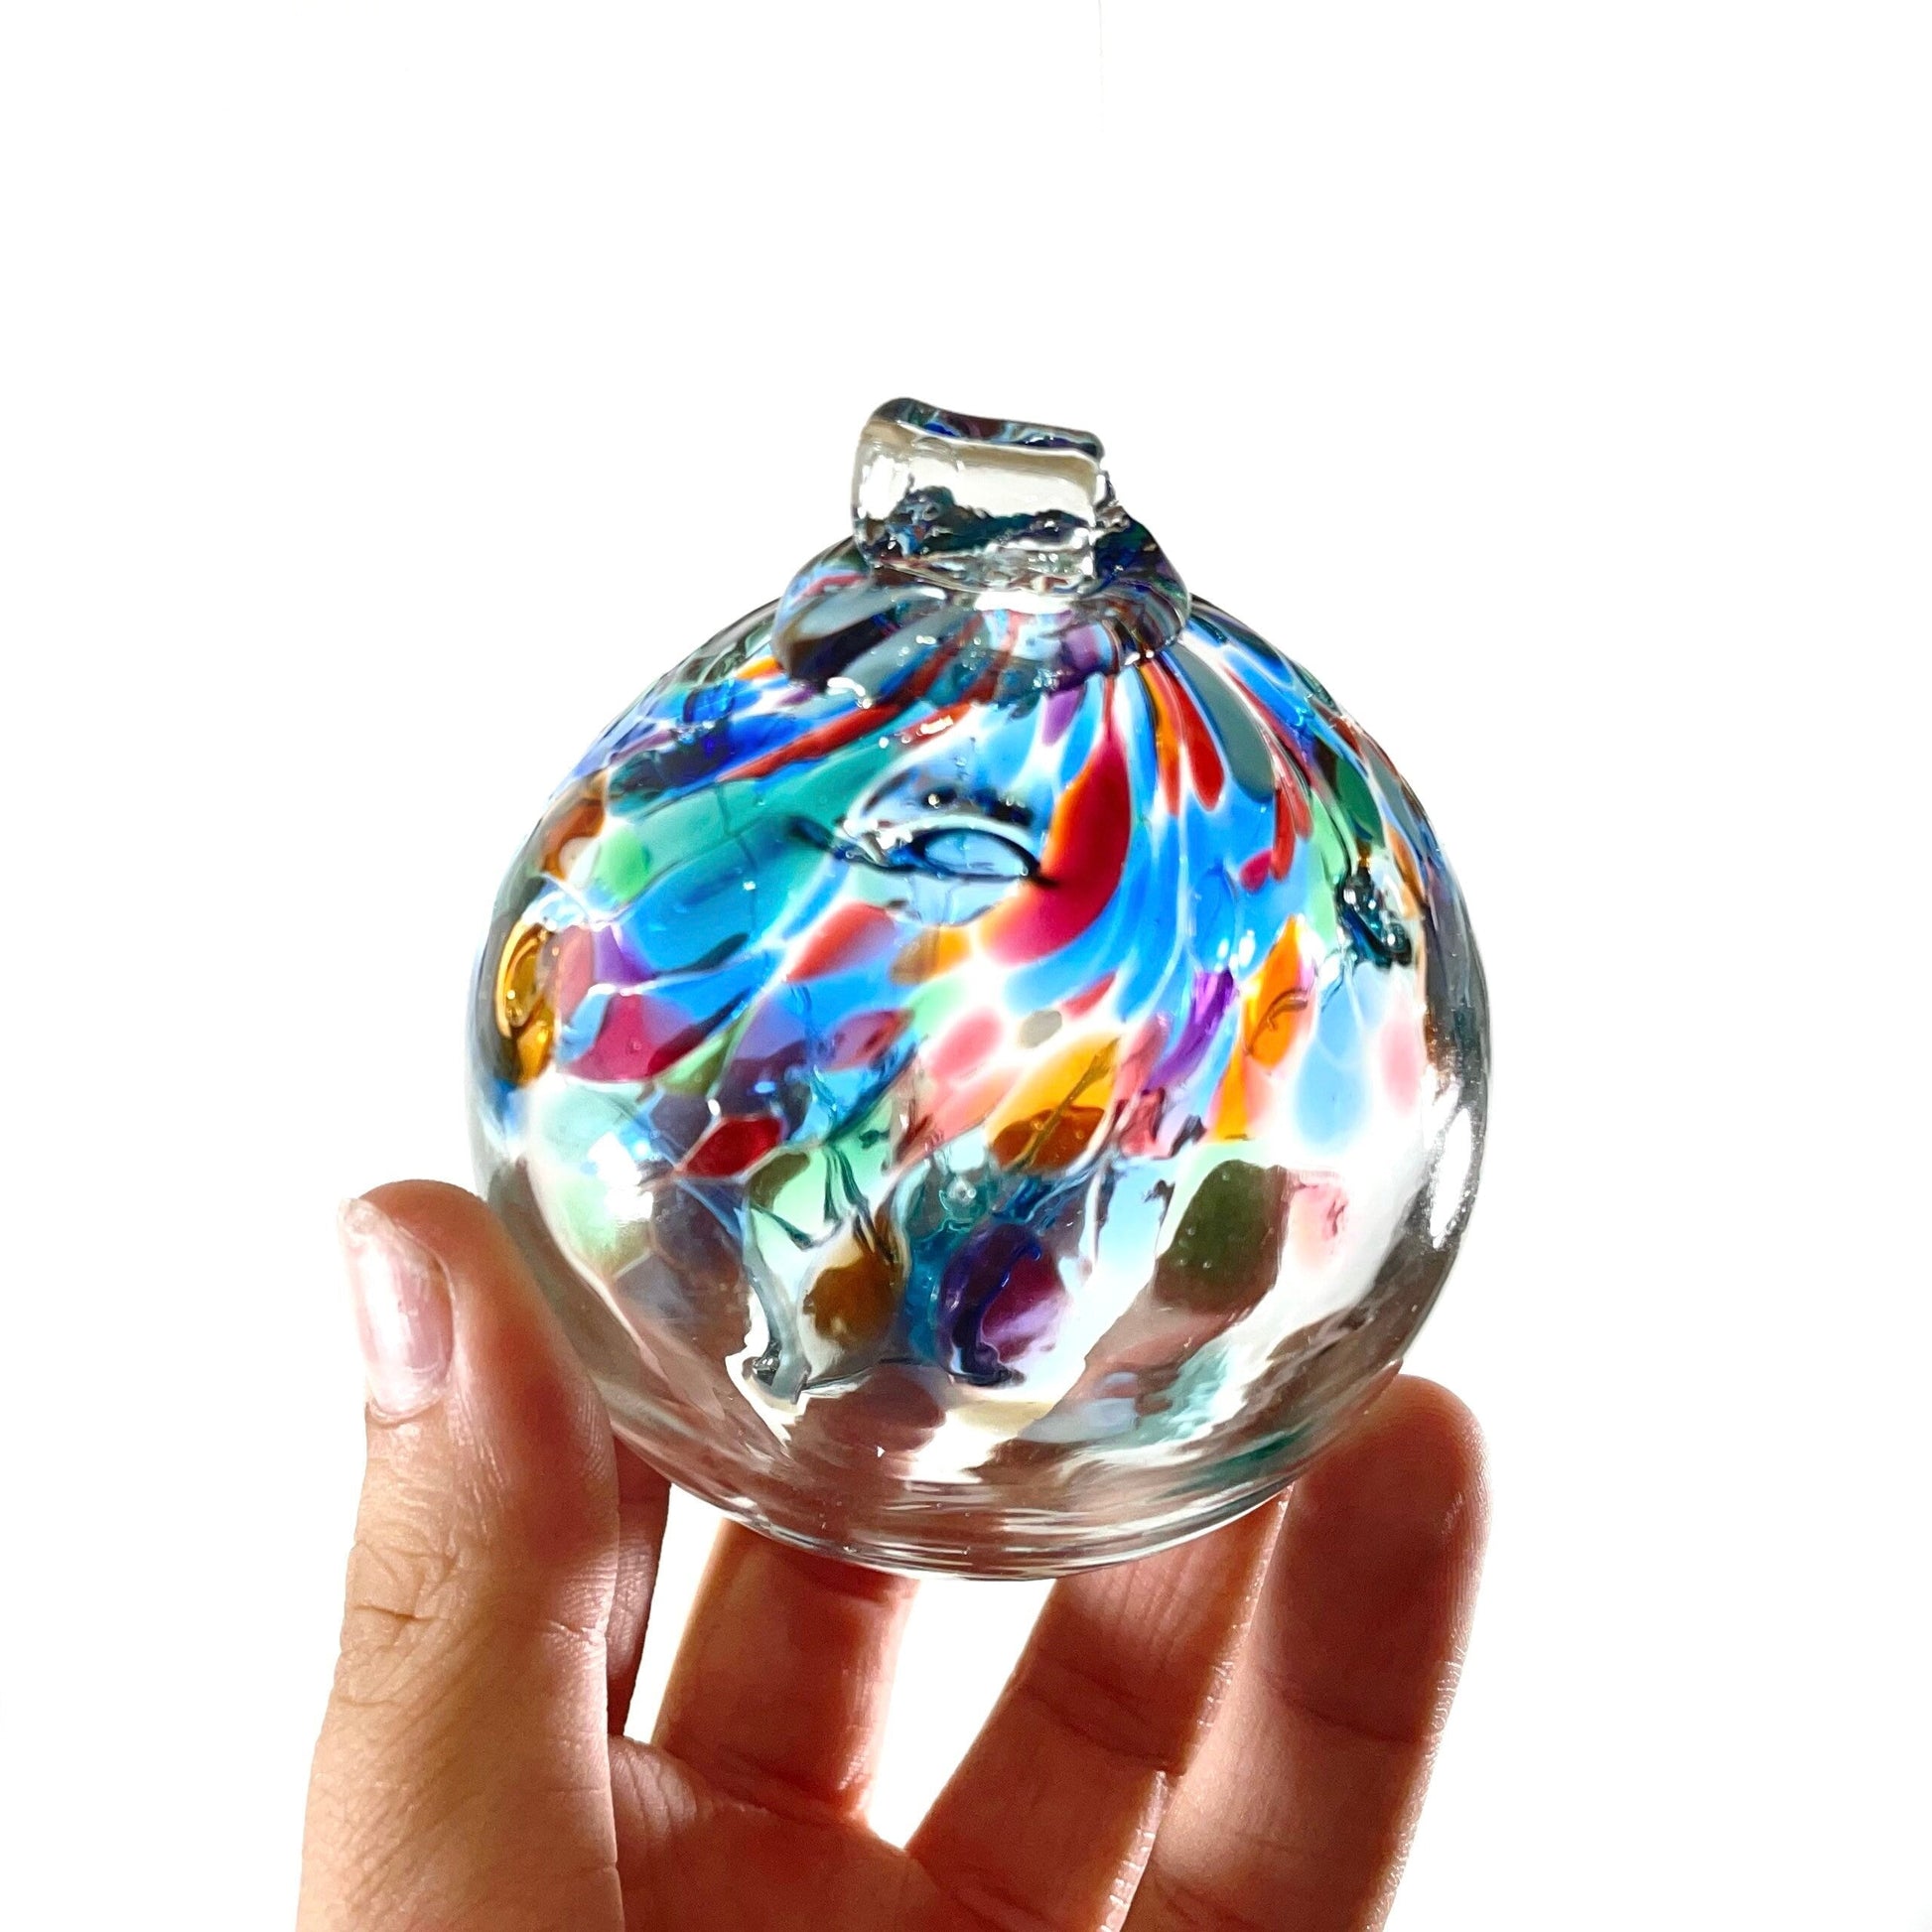 Handmade Glass Art 2” Globe Ornament - Tree of Caring